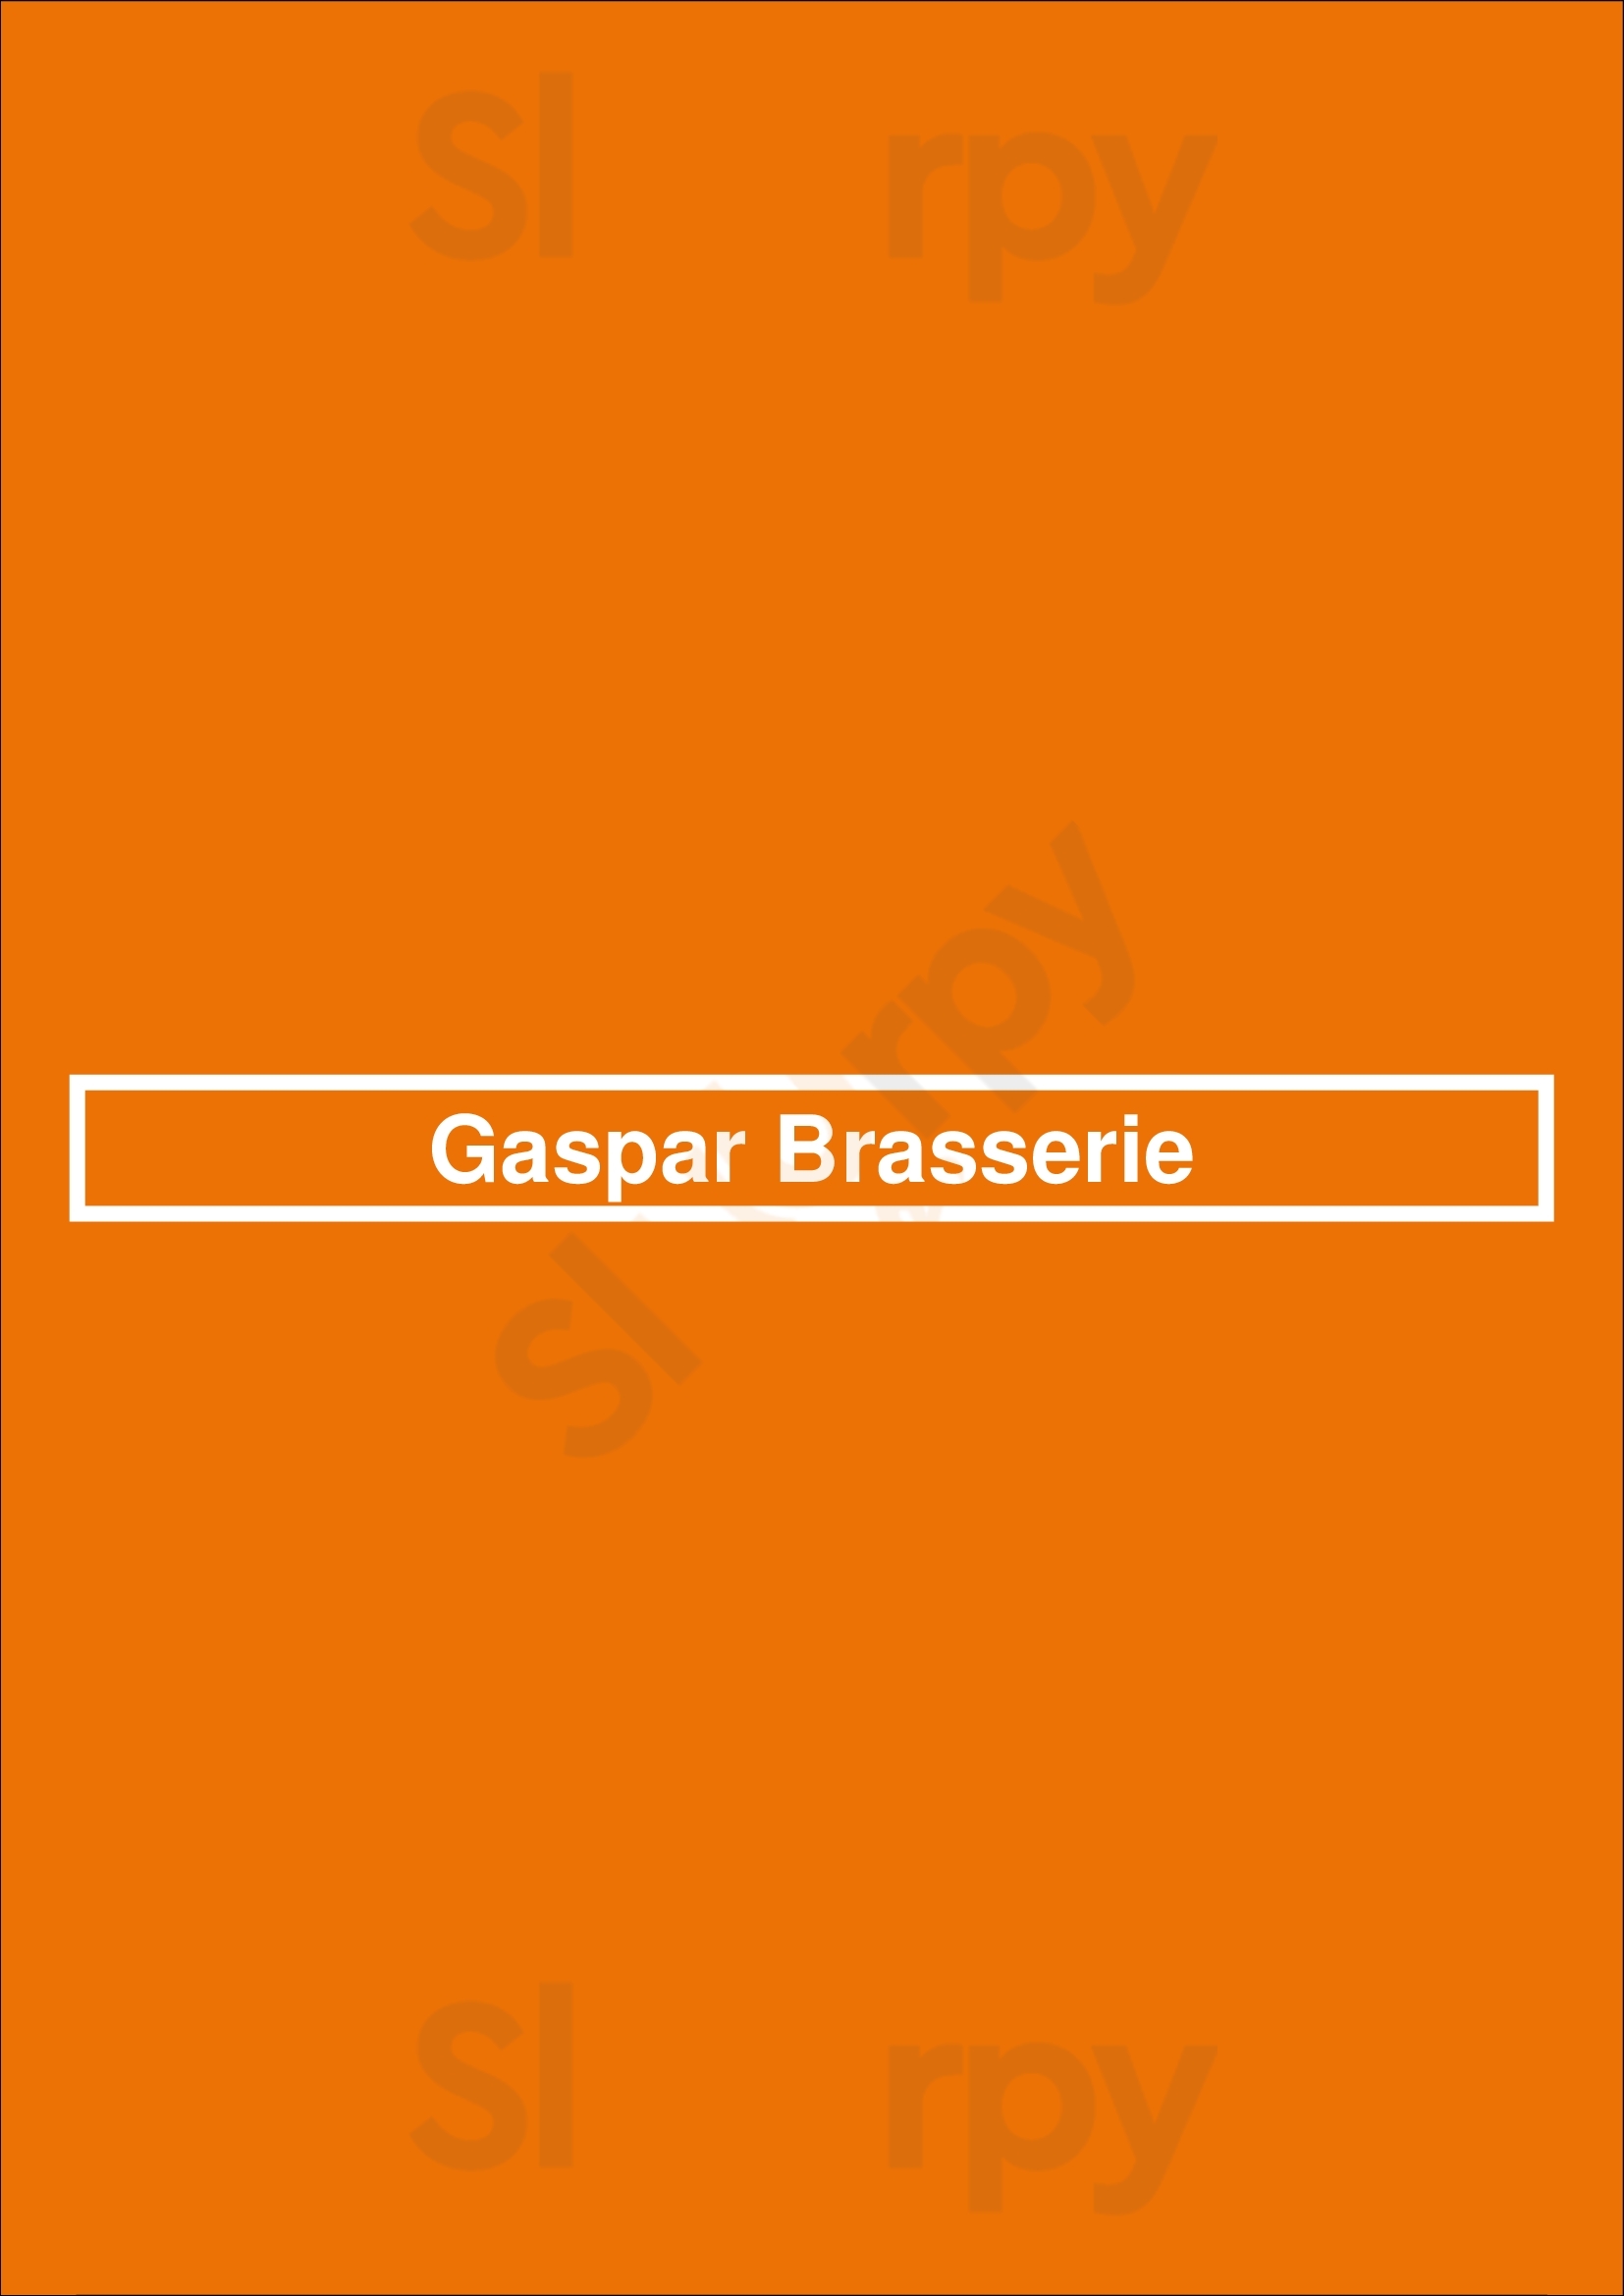 Gaspar Brasserie San Francisco Menu - 1